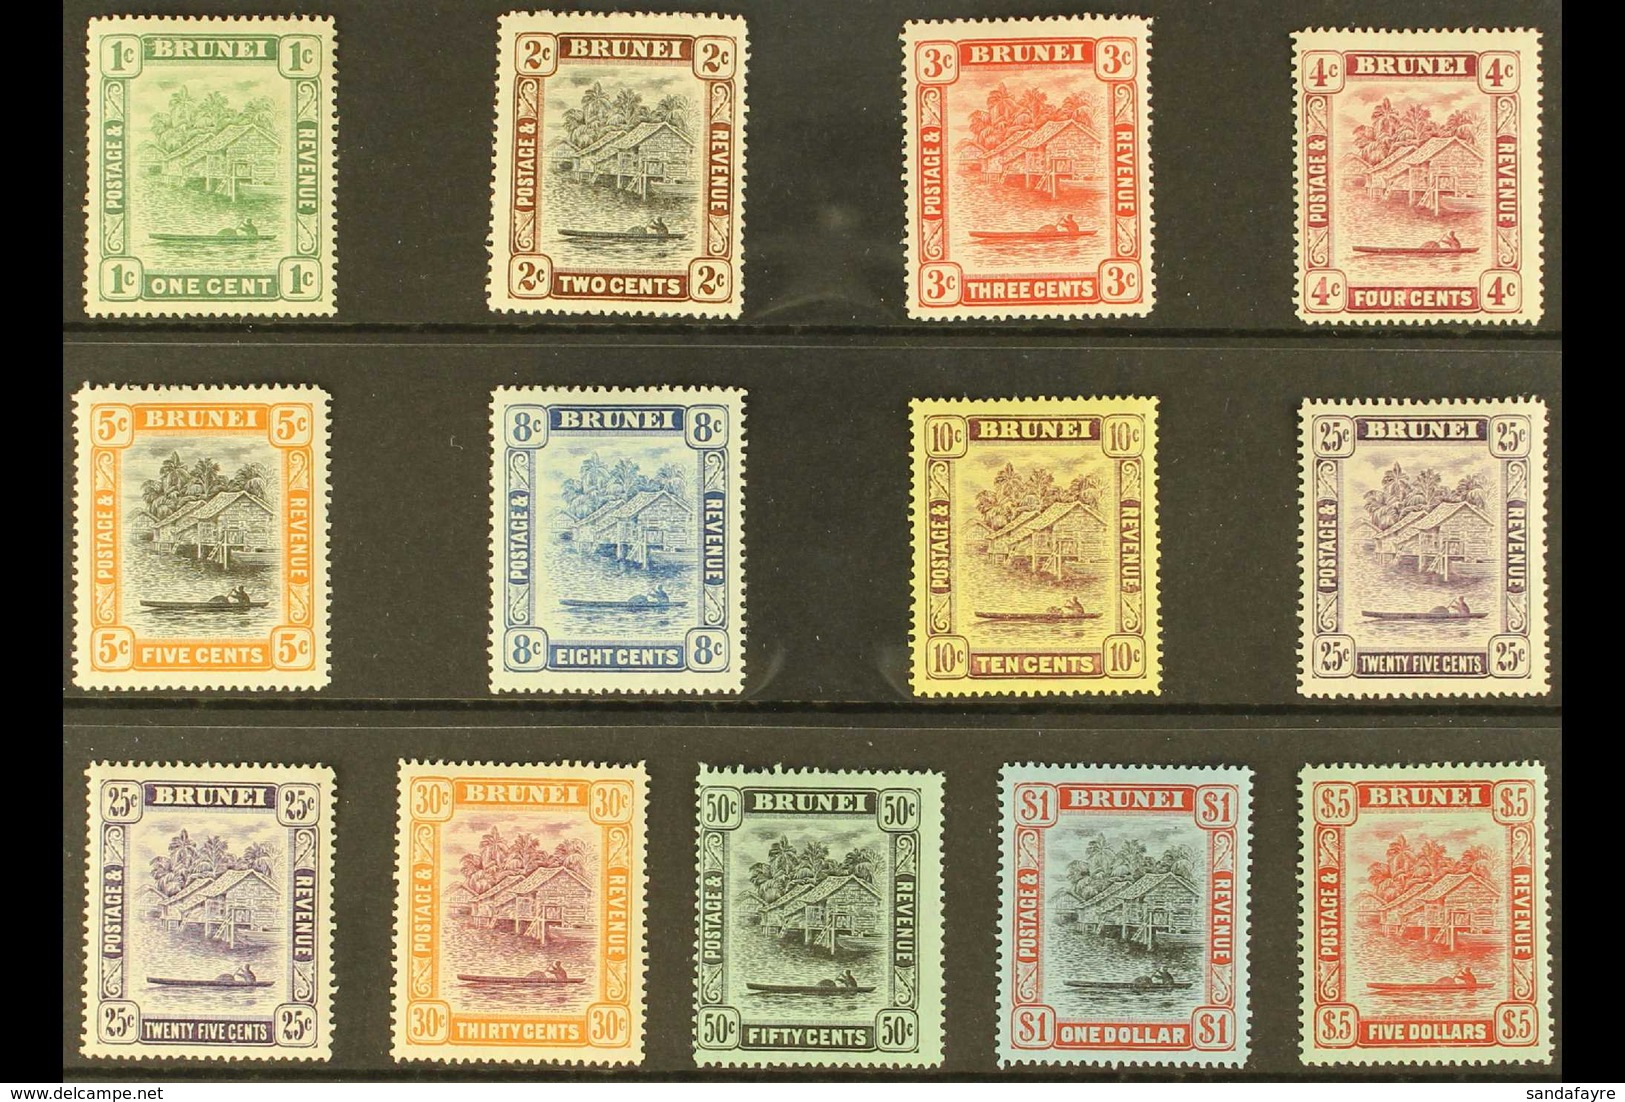 1908-22 MCA Wmk Definitive Set, SG 34/47, Plus 25c Deep Purple Shade, Fine Mint (13 Stamps) For More Images, Please Visi - Brunei (...-1984)